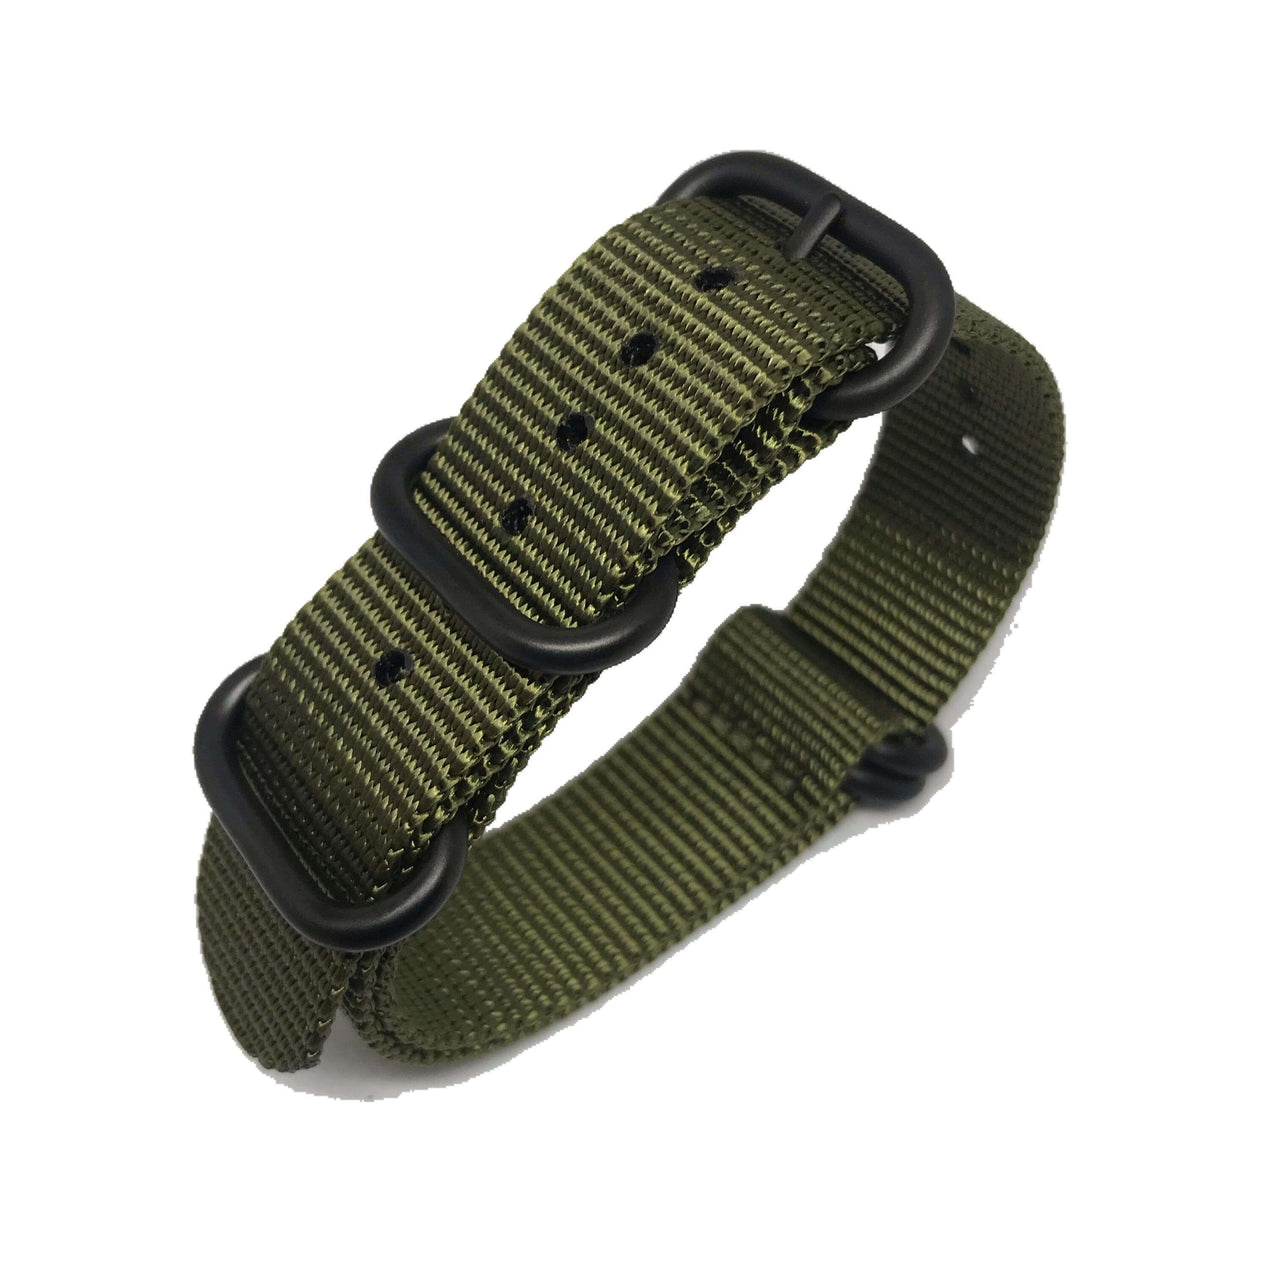 Zulu Military Style Strap - Military Green - Black Buckle